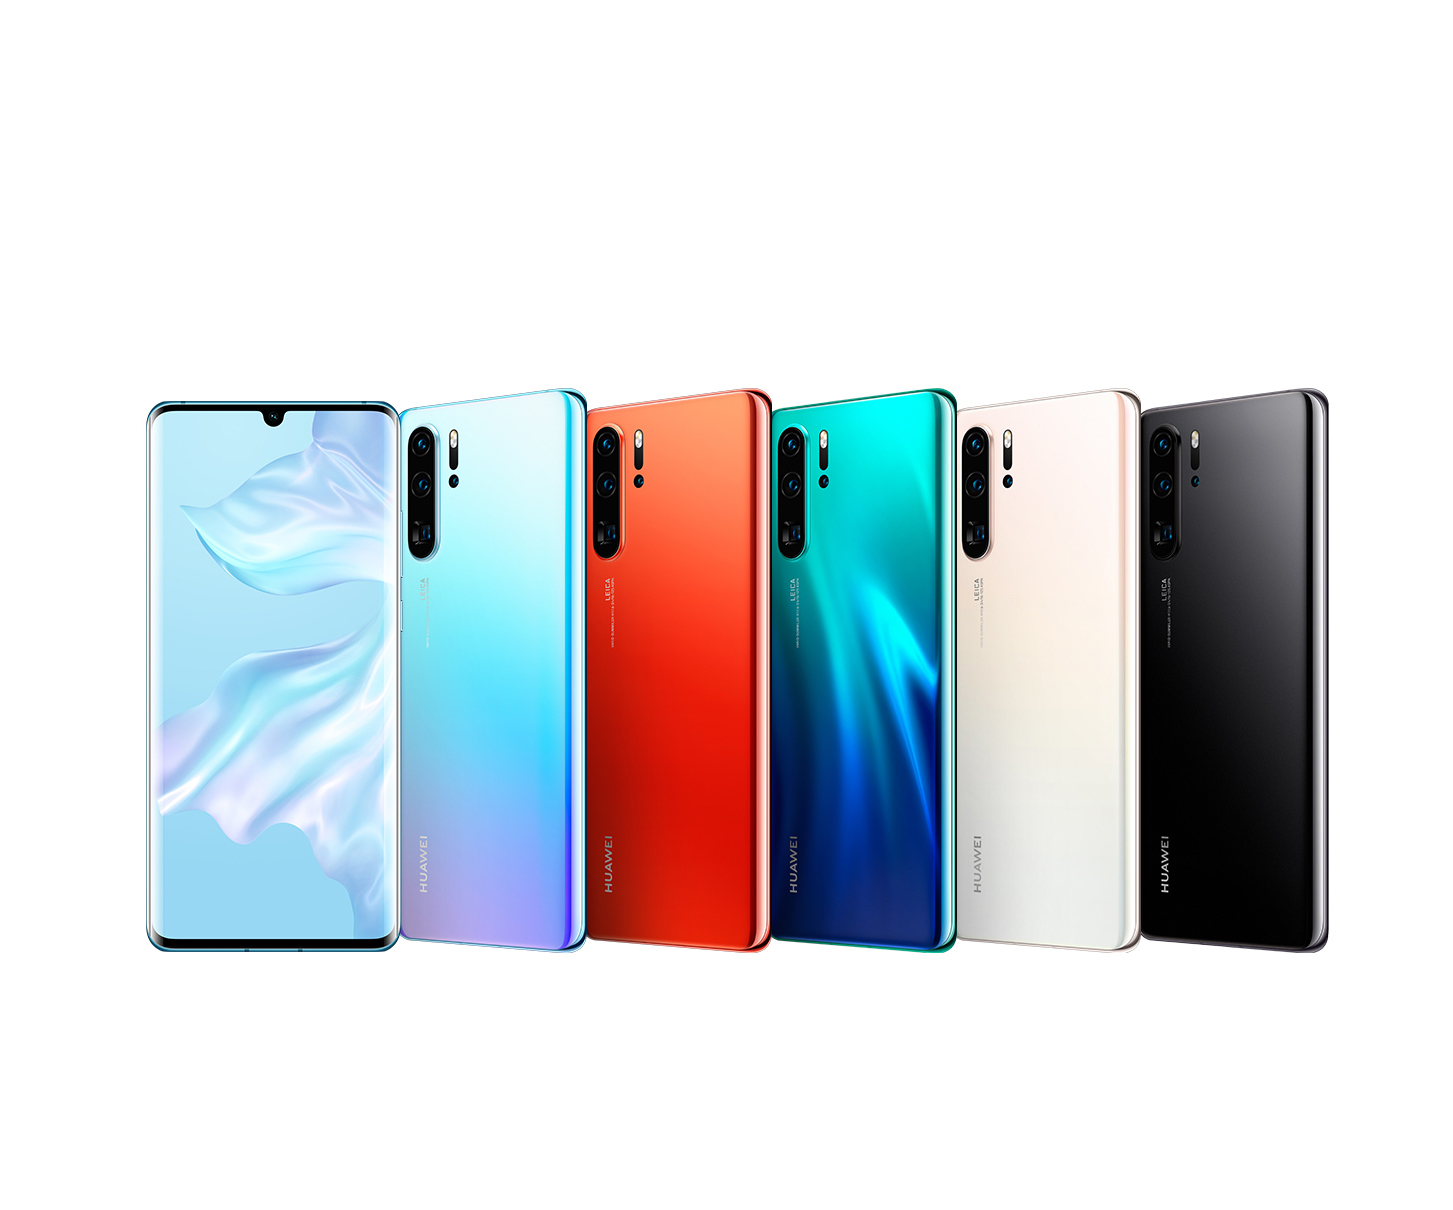 Huawei p30 оригинал. Huawei p30 Pro цвета. Хуавей п30 про цвета. P30 Pro цвета. Huawei p30 цвета корпуса.